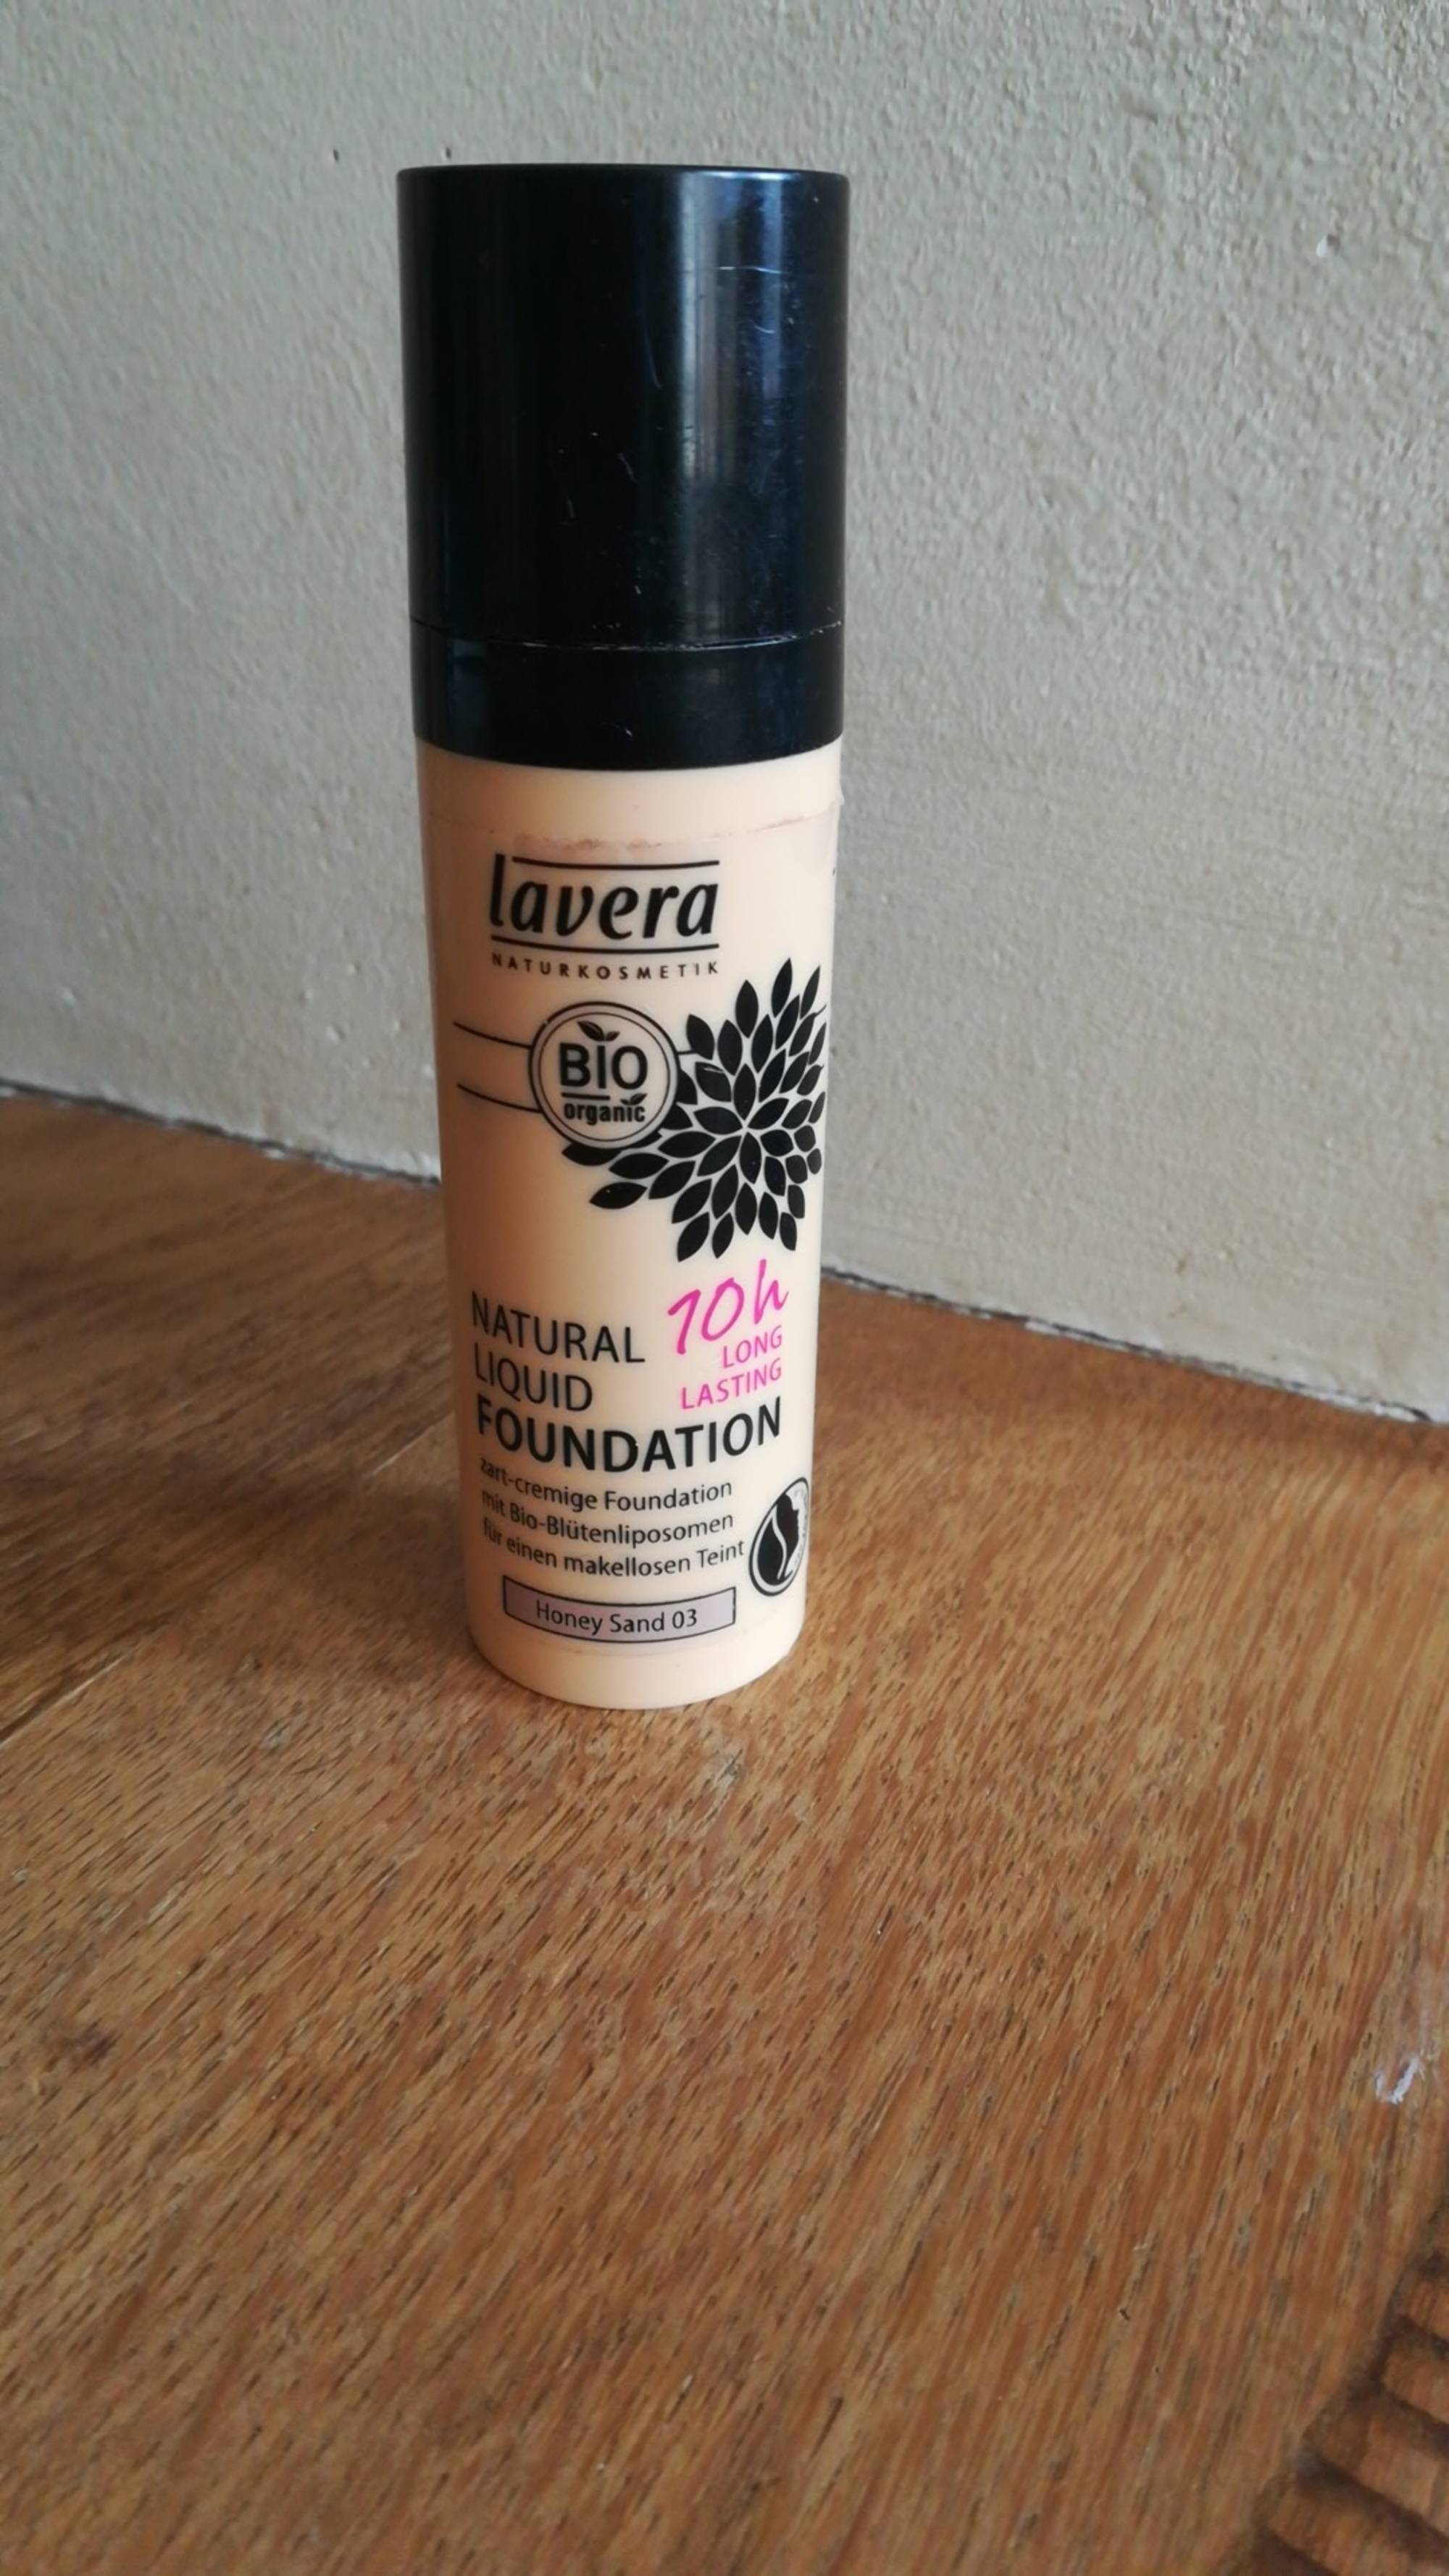 LAVERA - Honey sand 03 - Natural liquid foundation